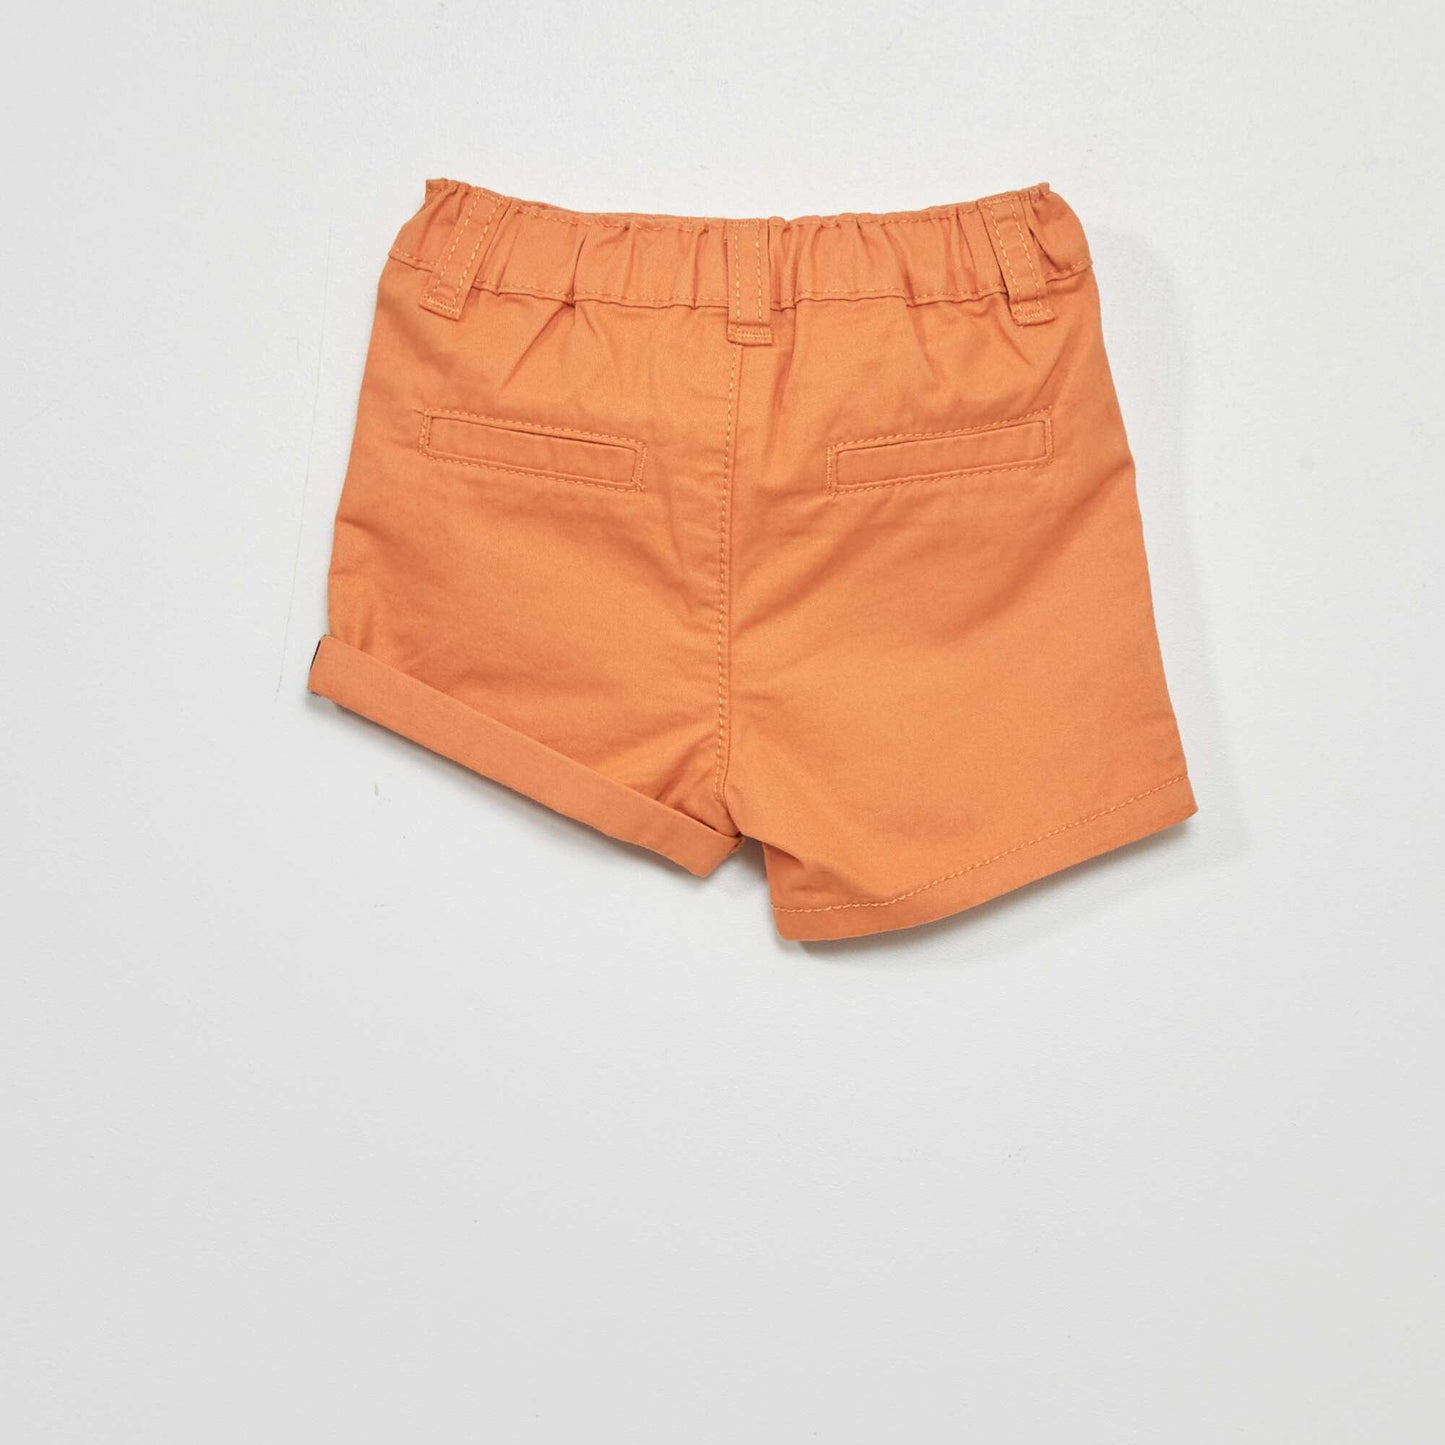 Twill shorts with adjustable waist rust orange